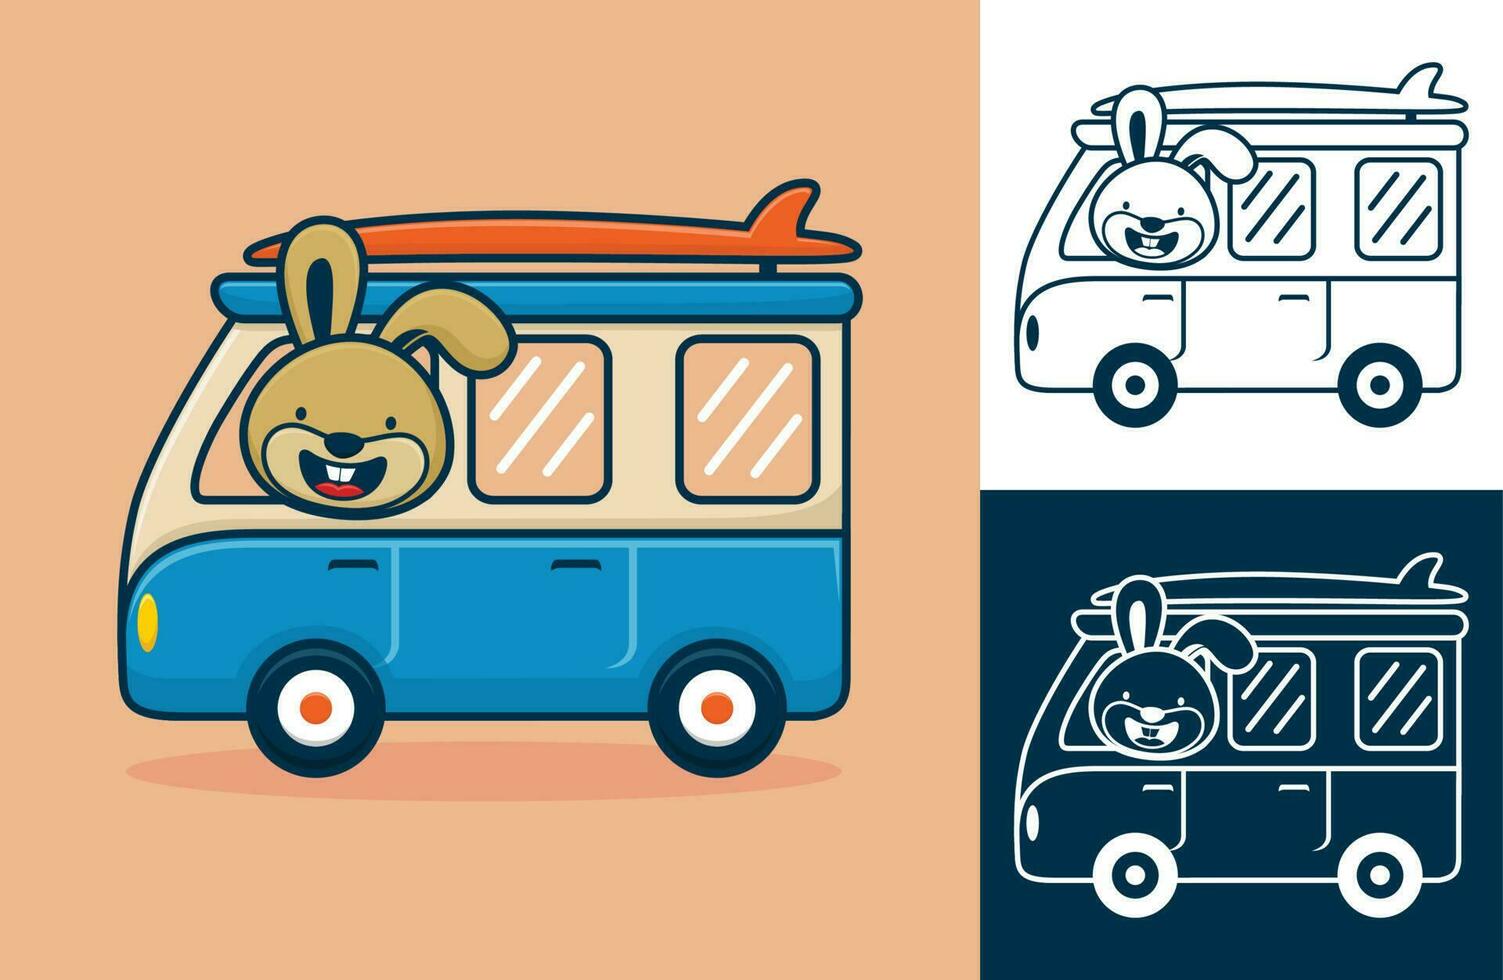 Cute rabbit on van carrying surfboard. Vector cartoon illustration in flat icon style